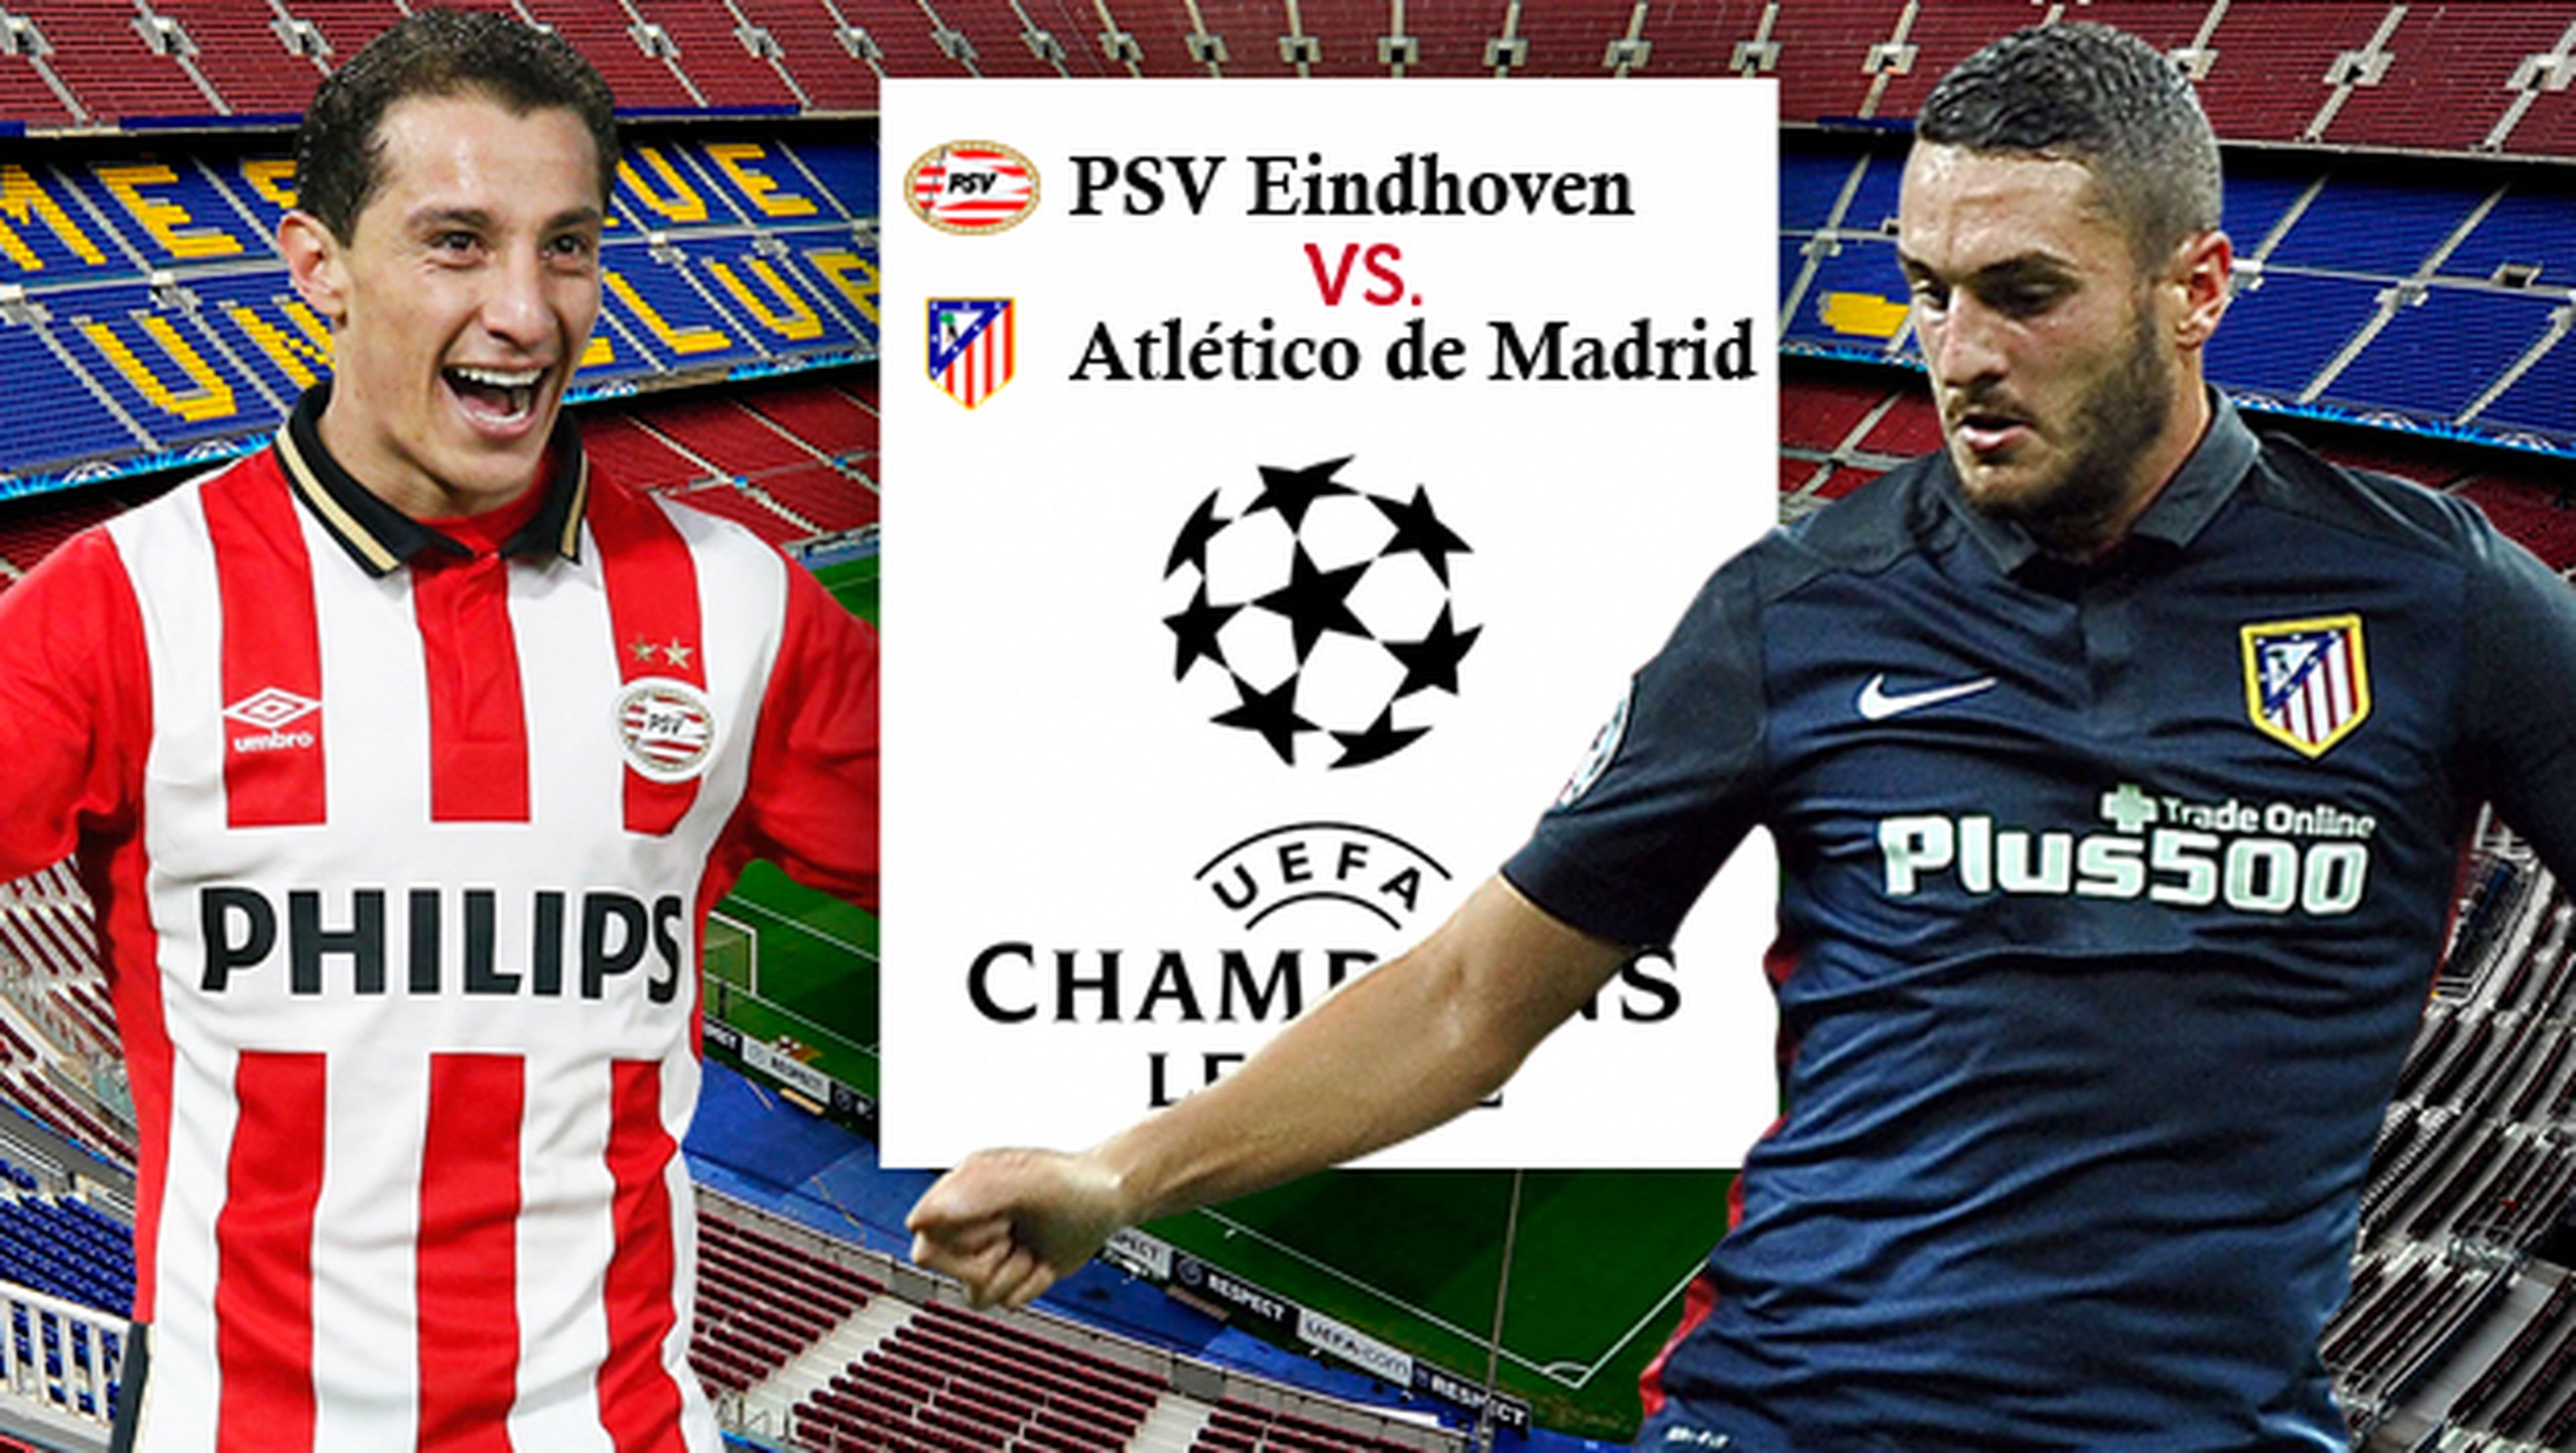 PSV vs Atlético de Madrid, cómo ver psv atletico, ver online psv atletico, psv atletico madrid